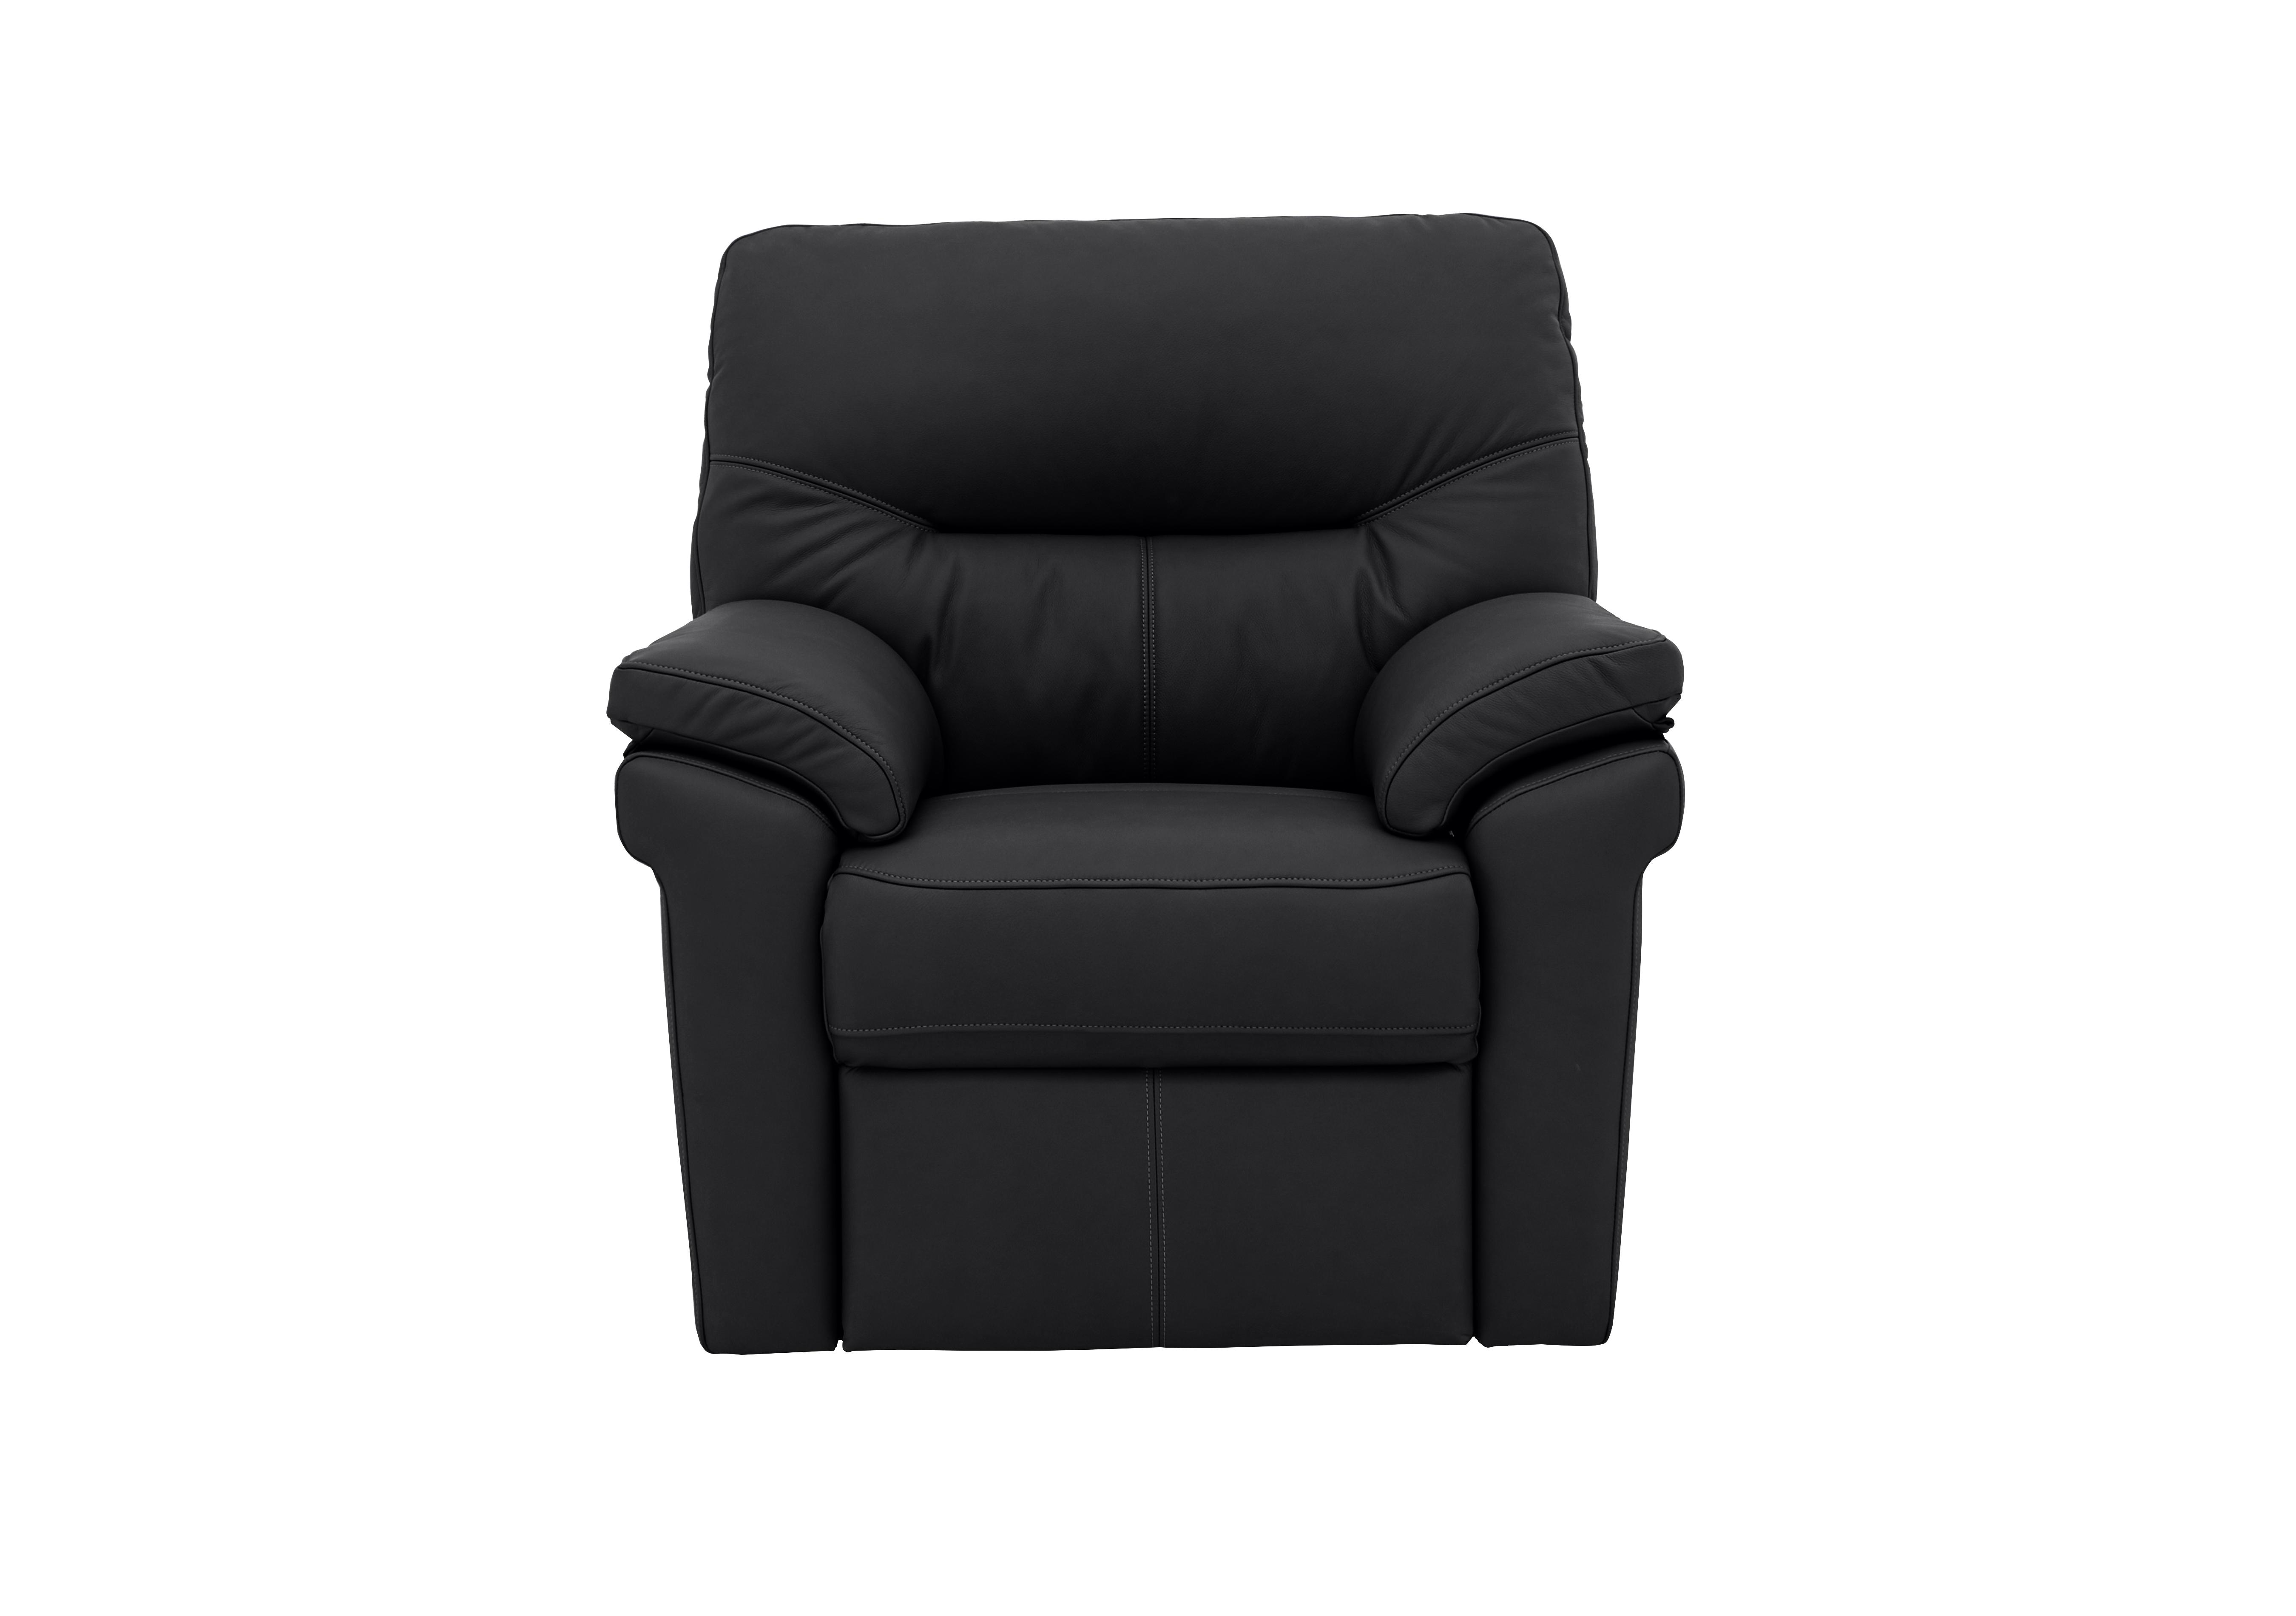 Seattle Leather Armchair in L854 Cambridge Black on Furniture Village